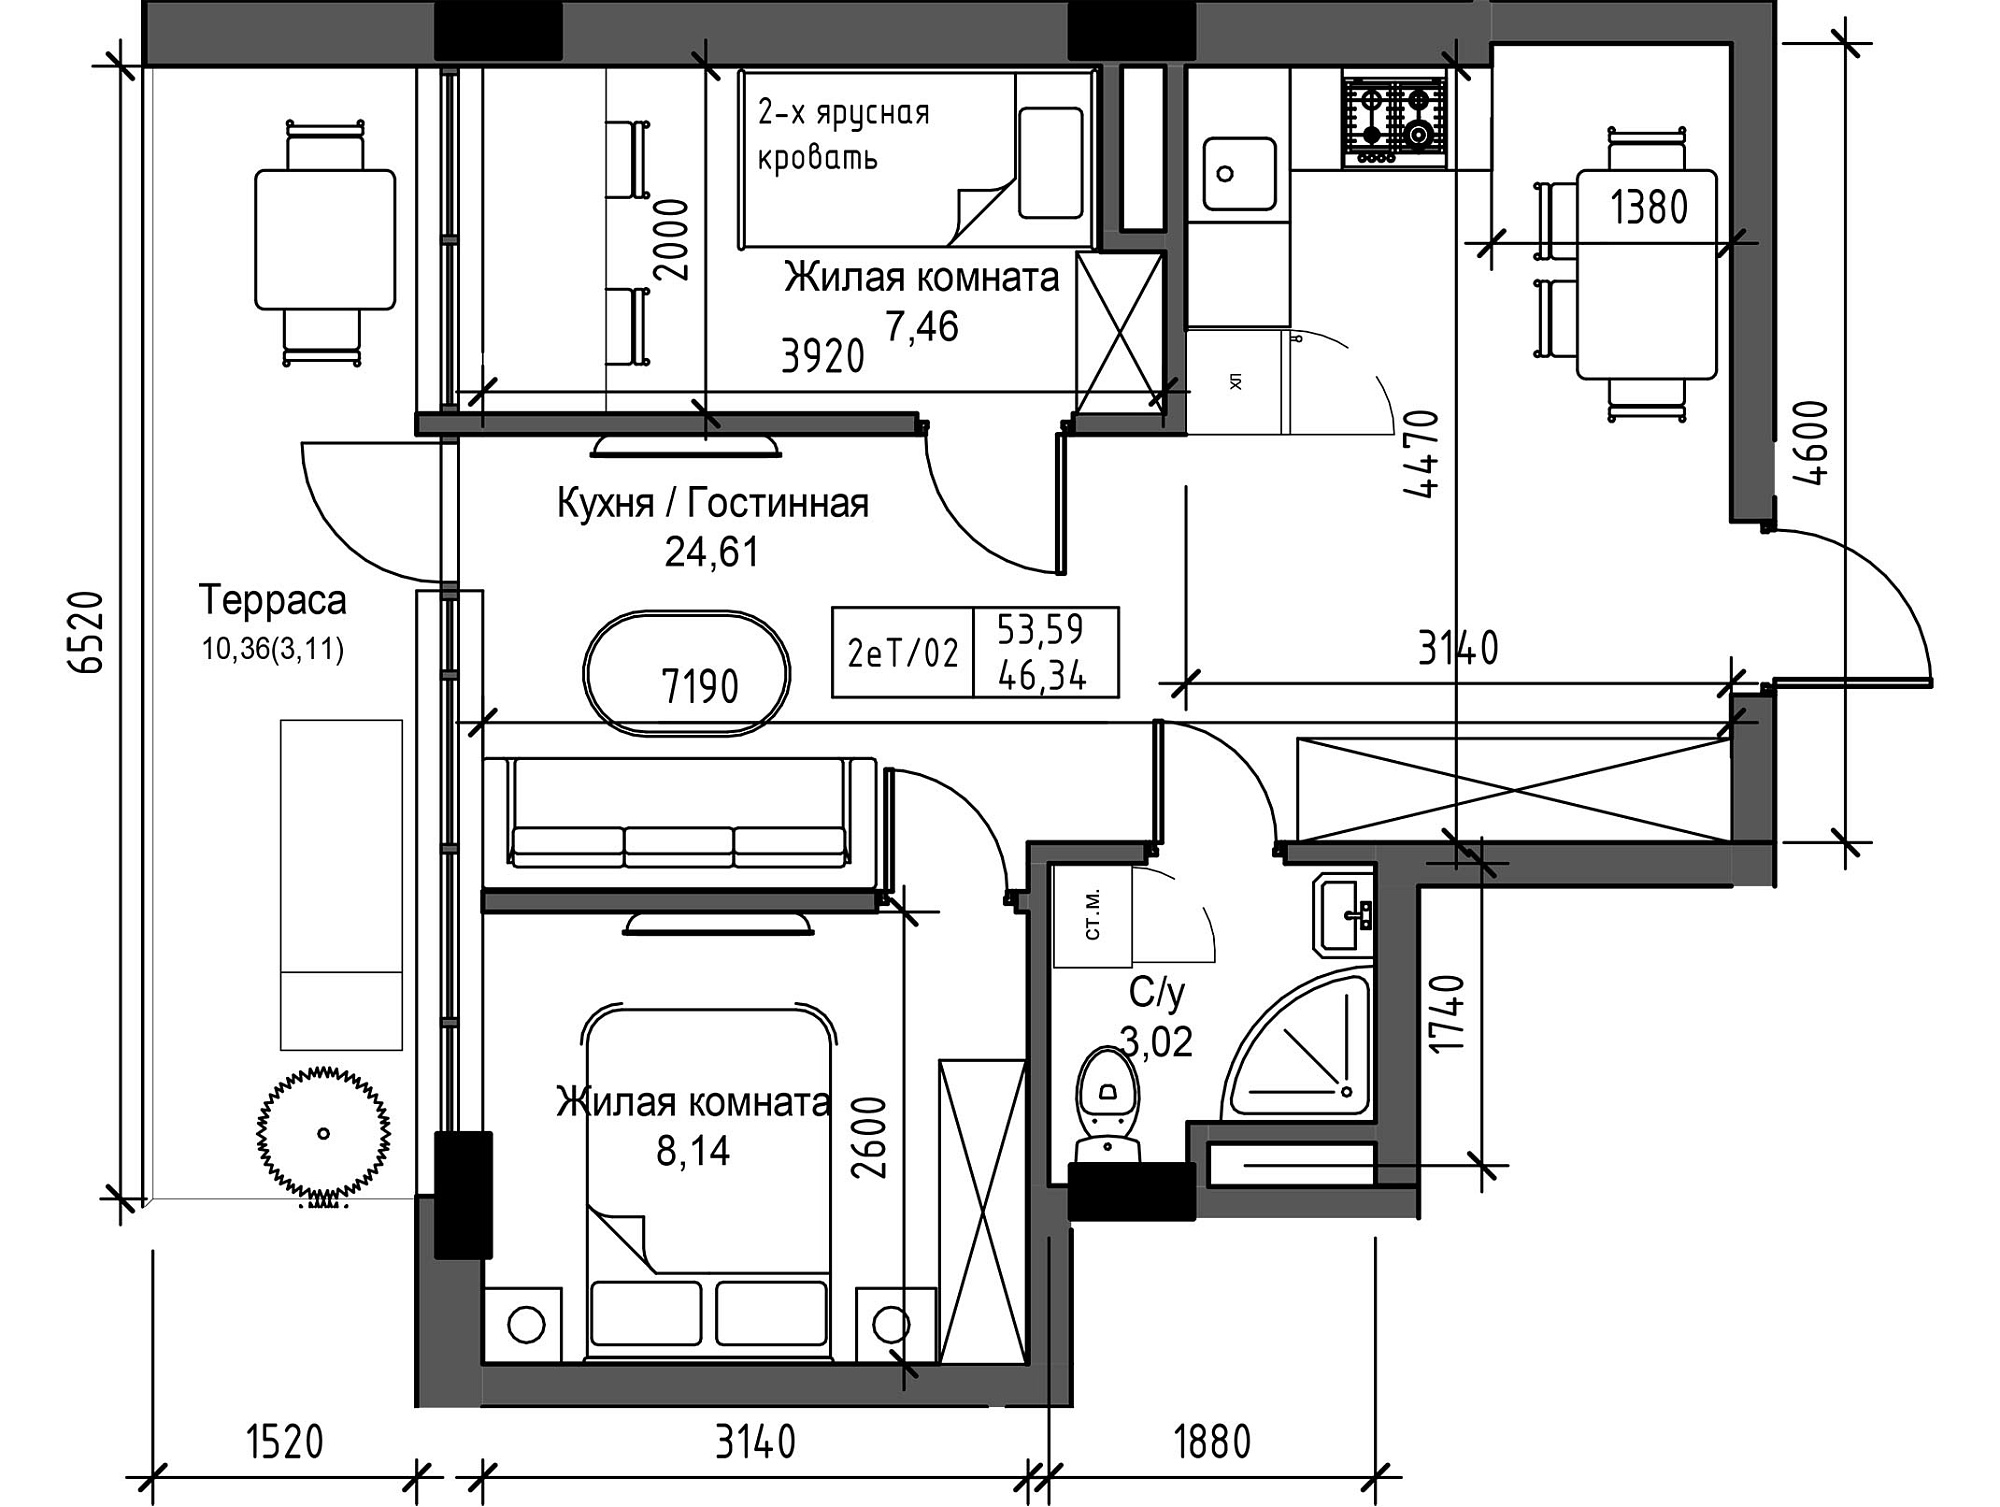 Планування 2-к квартира площею 43.32м2, UM-003-11/0118.